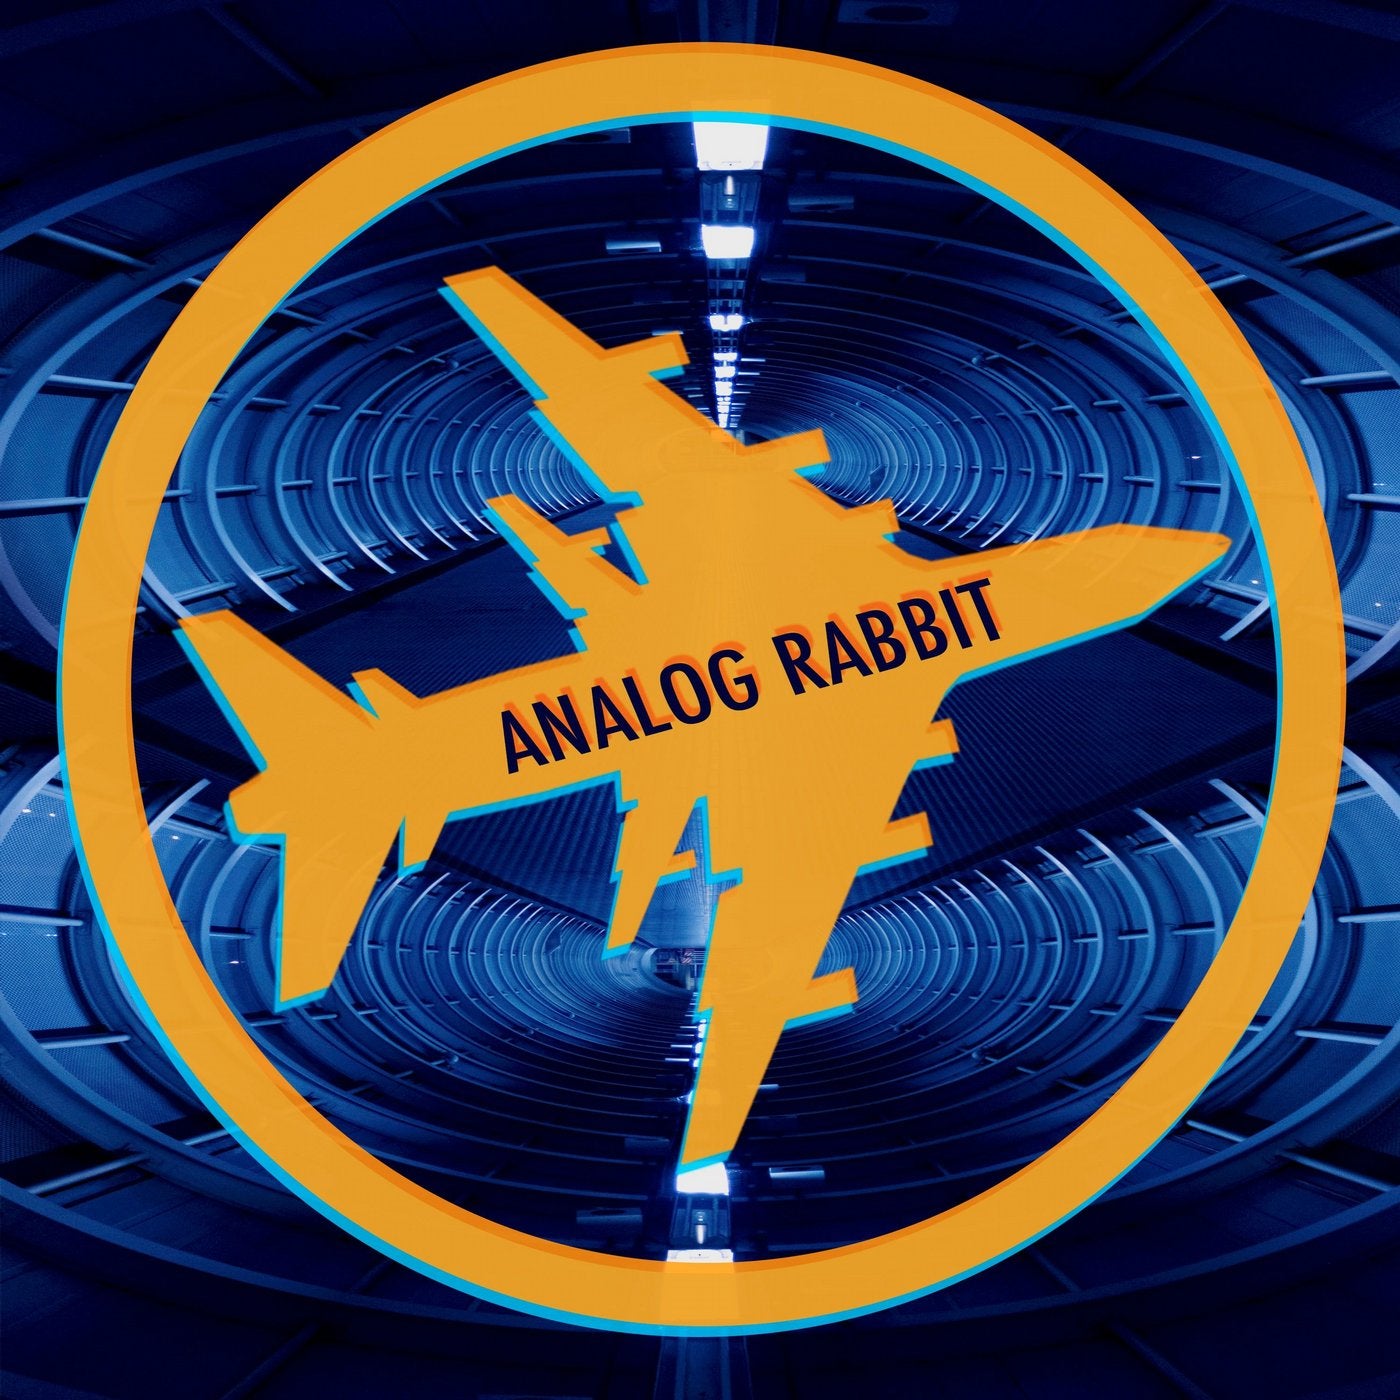 Analog Rabbit